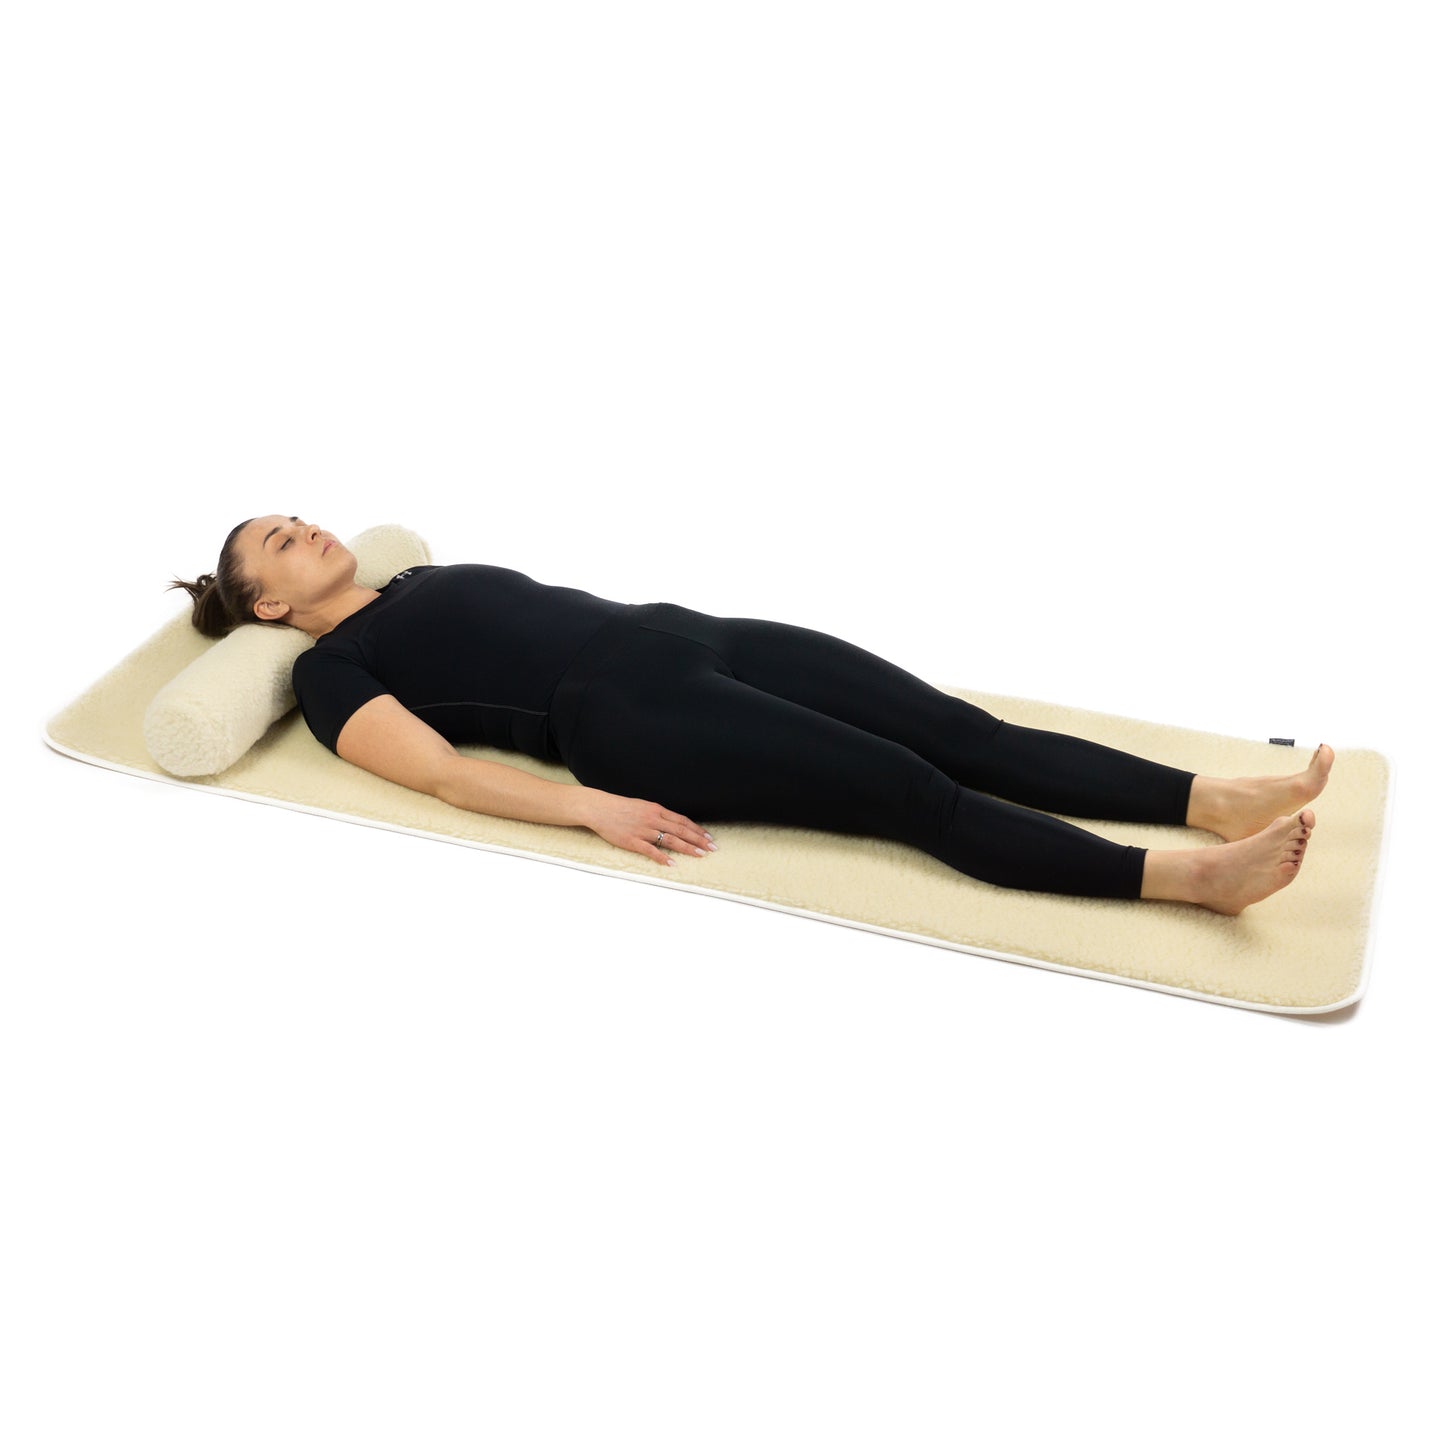 Merino wool yoga roller cushion - Natural